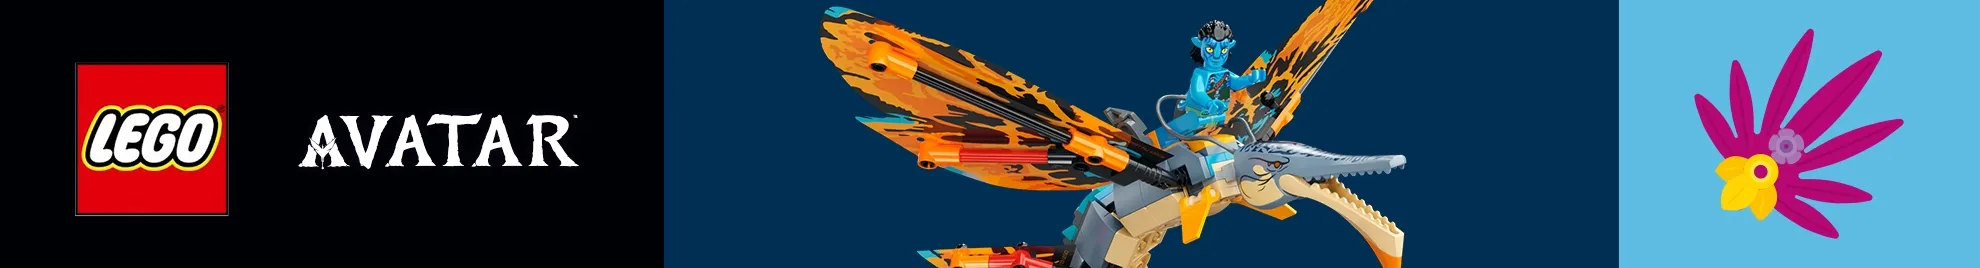 LEGO avatar banner